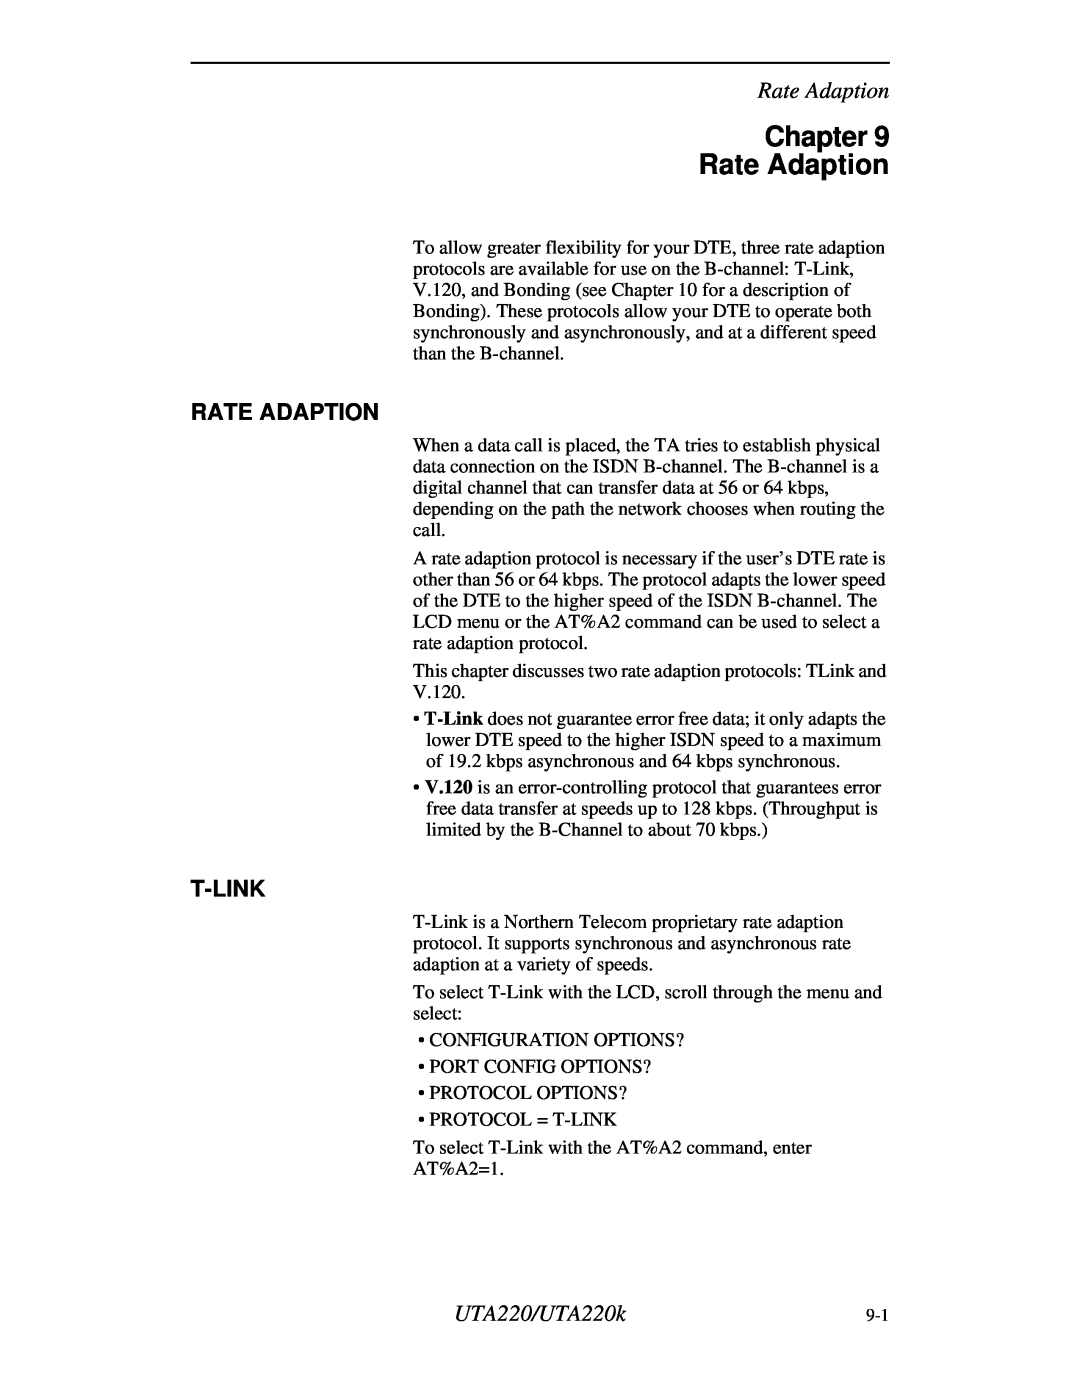 Northern UTA220/UTA220k manual Chapter Rate Adaption, T-Link 